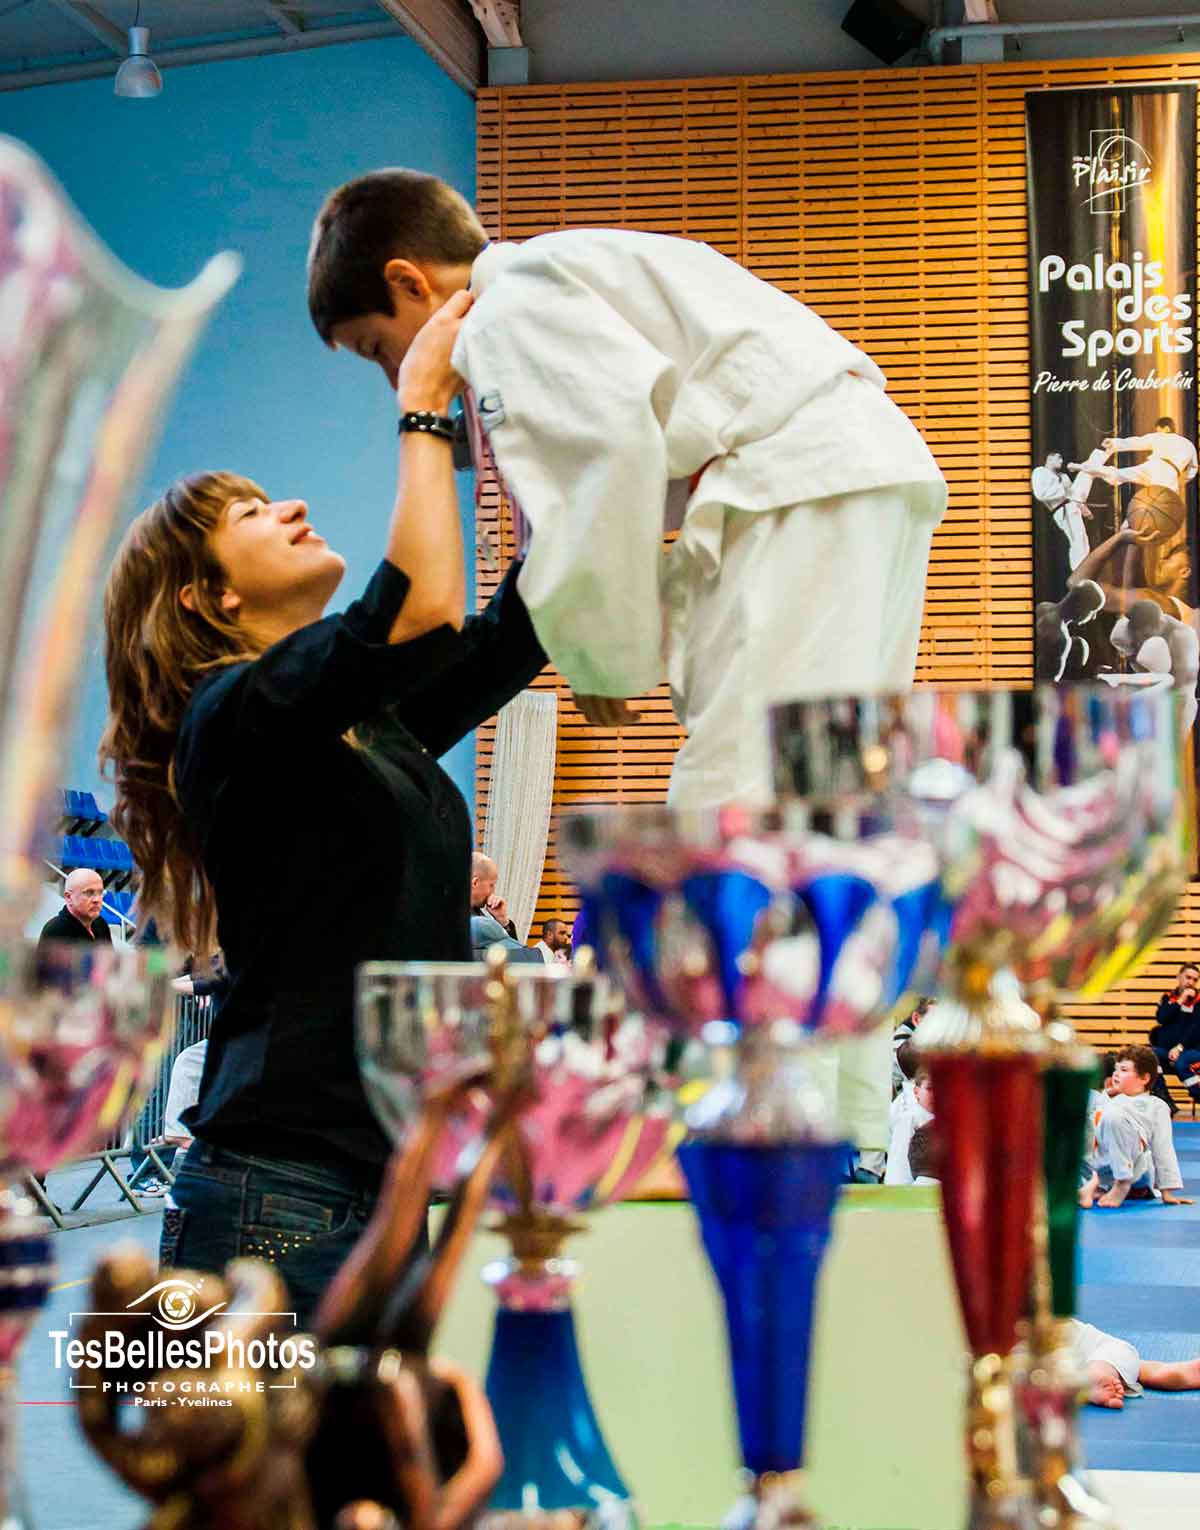 Reportage photo d’entreprise Yvelines, photographe entreprise de judo Yvelines